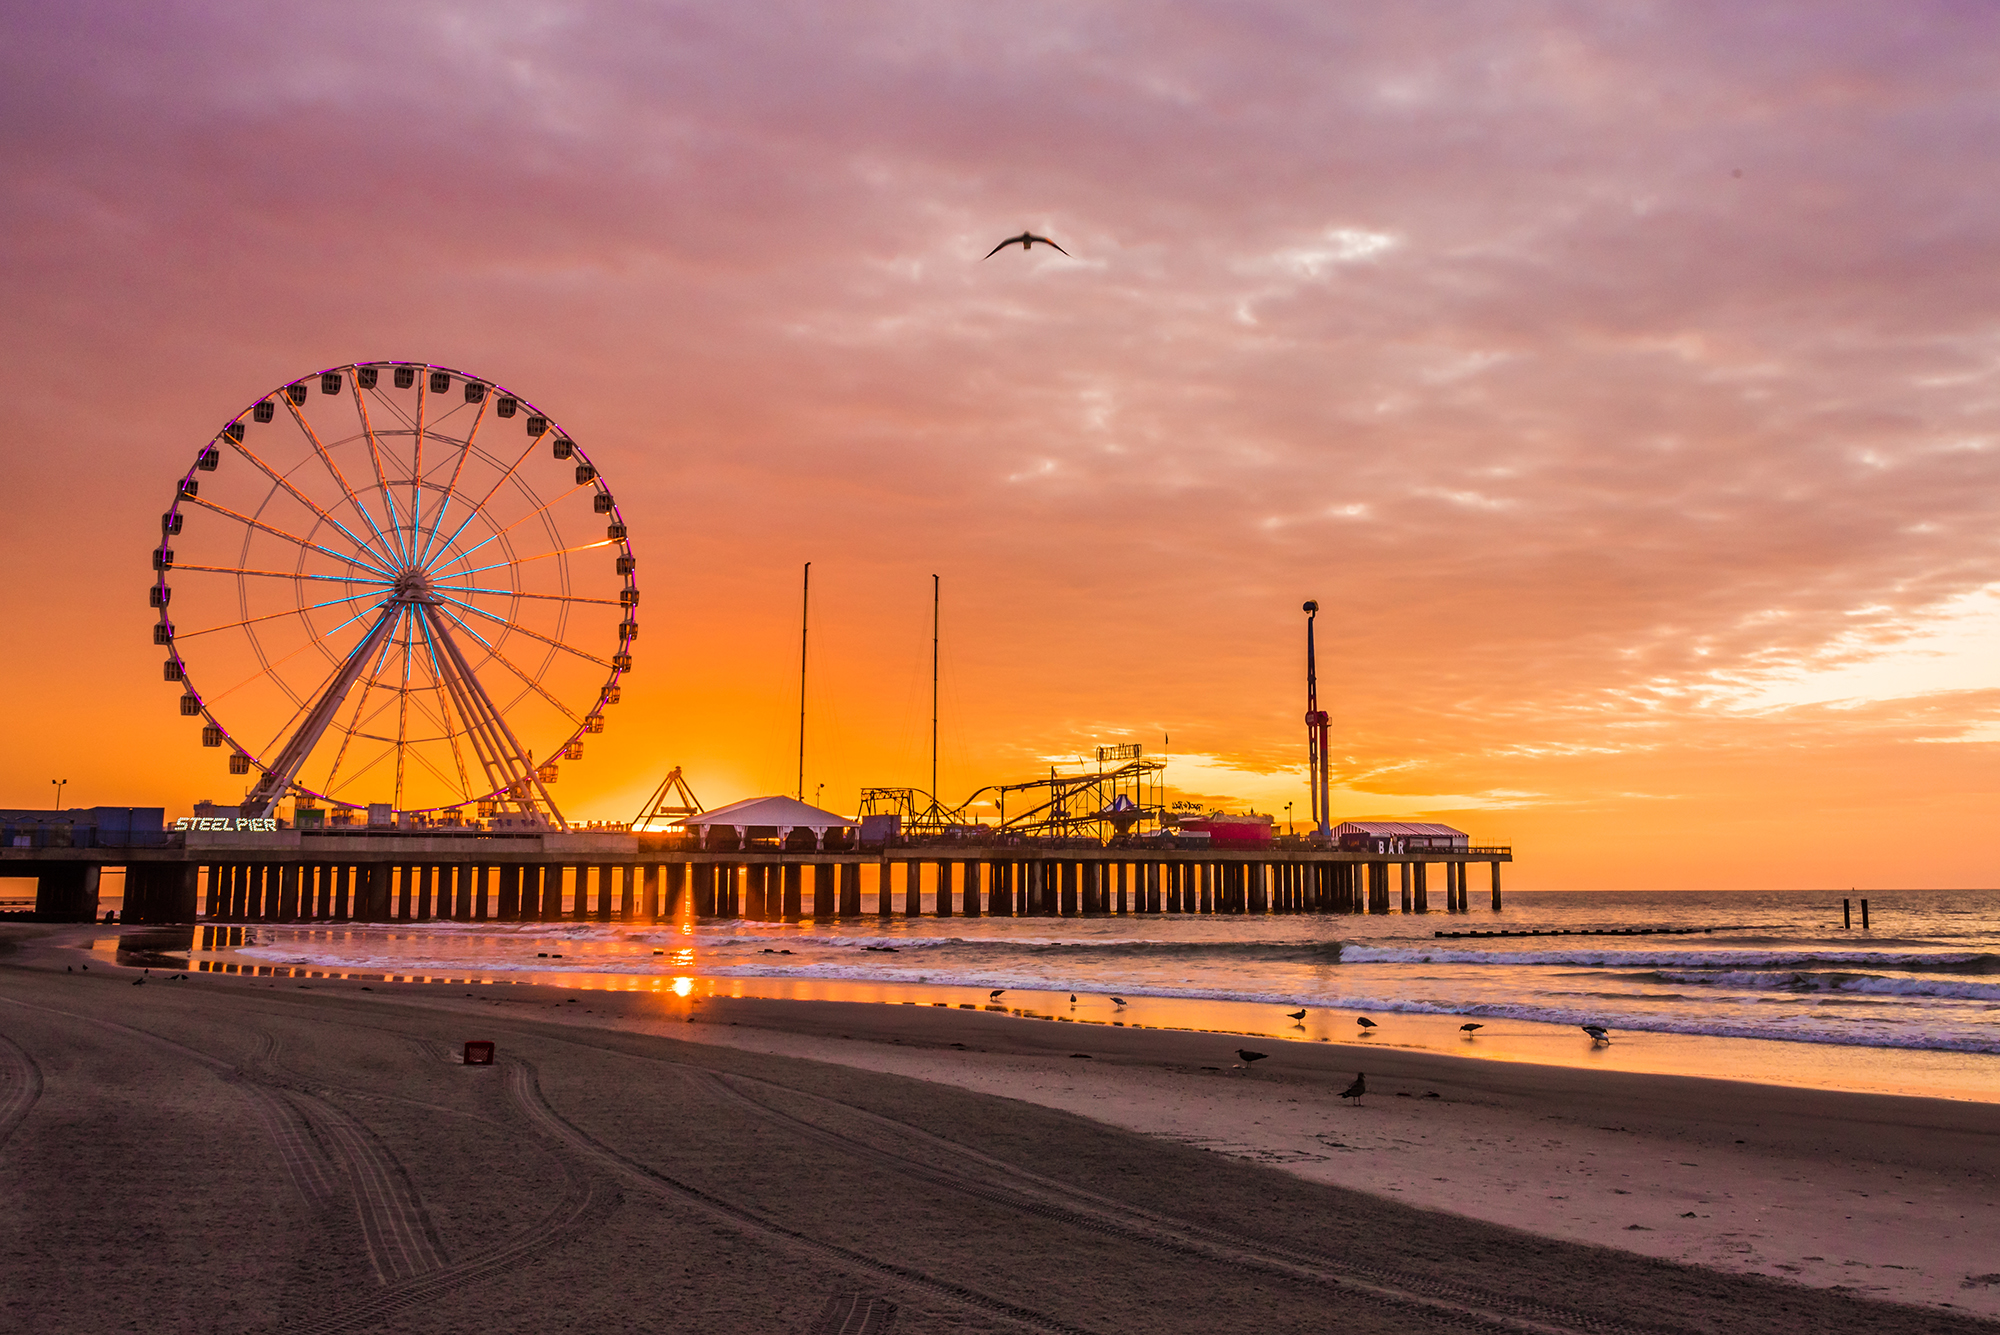 Against a dusk sky, a Ferris wheel rises above a pier.